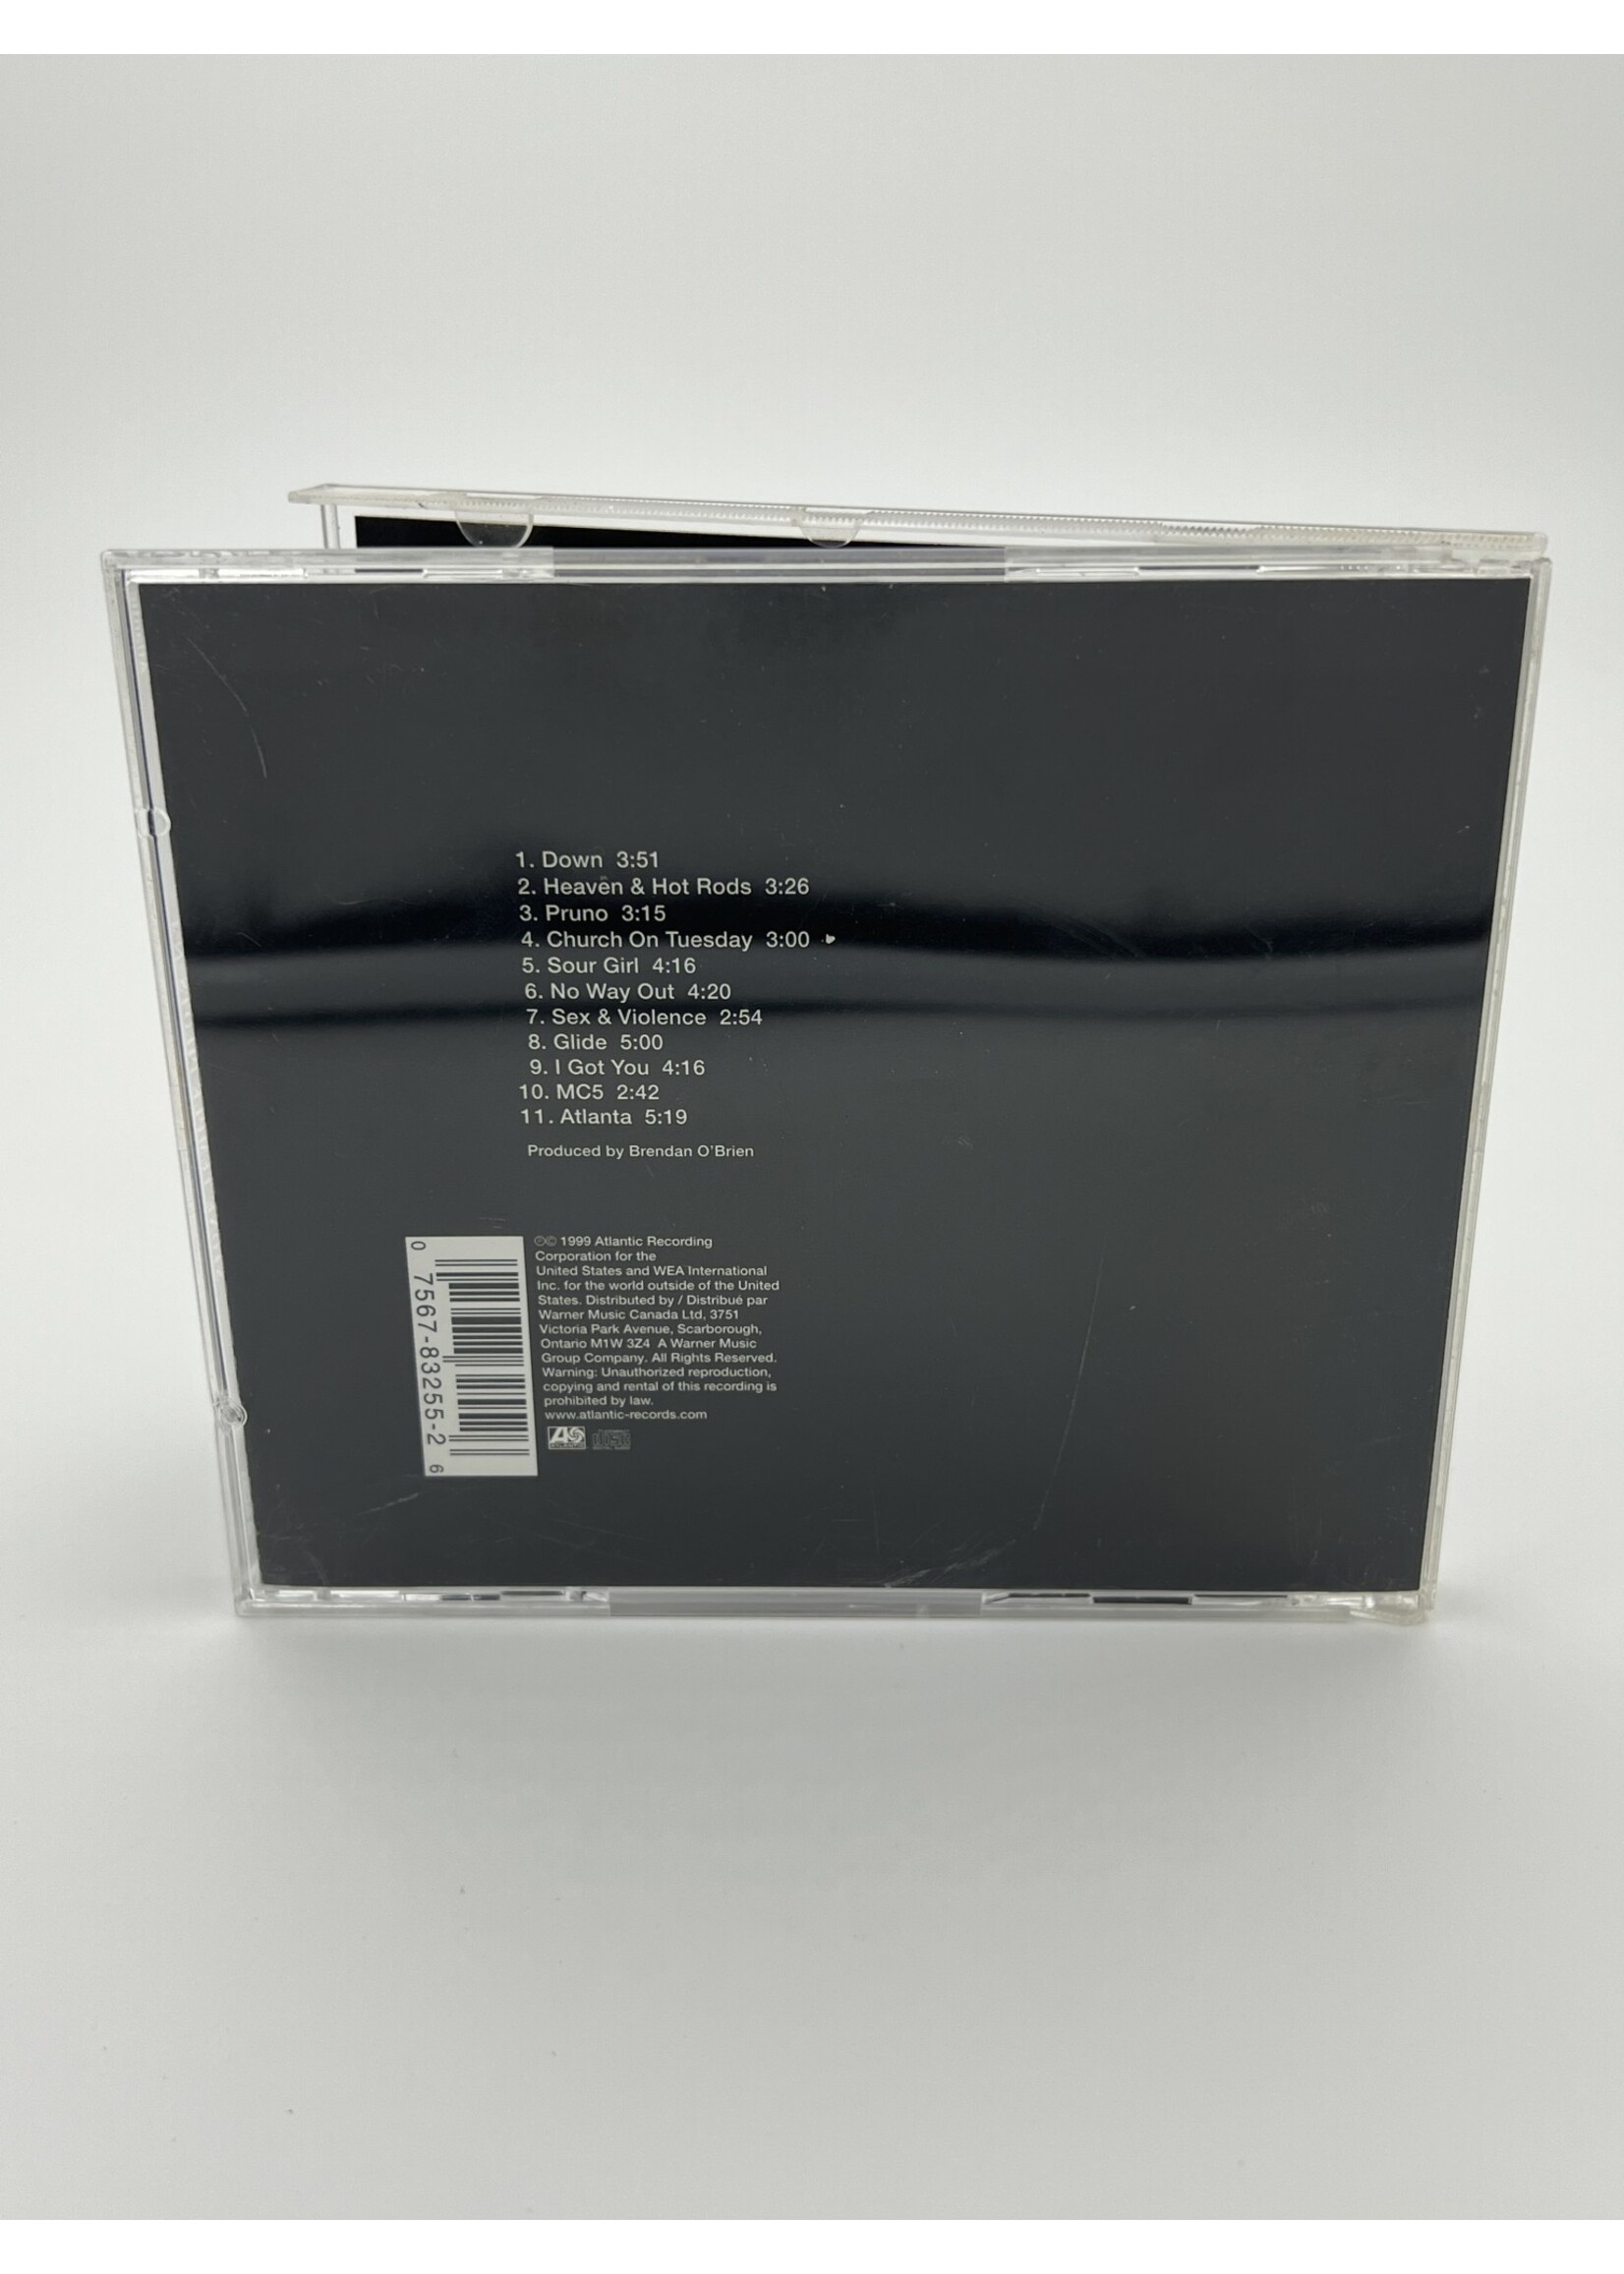 CD   Stone Temple Pilots No 4 CD